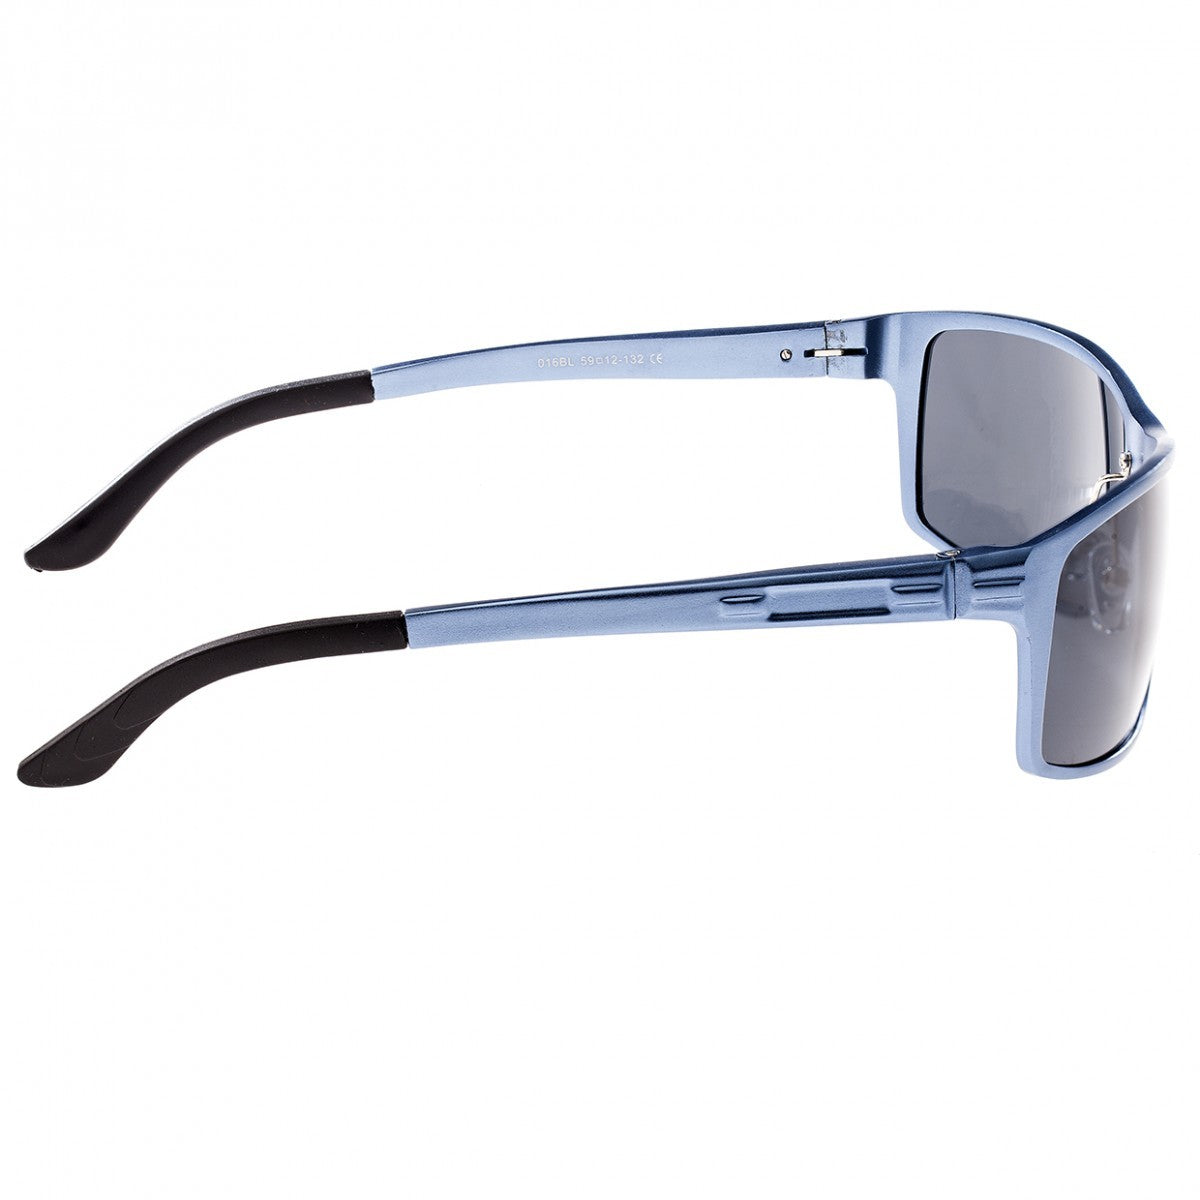 Breed Kaskade Aluminium Polarized Sunglasses - Blue/Black - BSG016BL